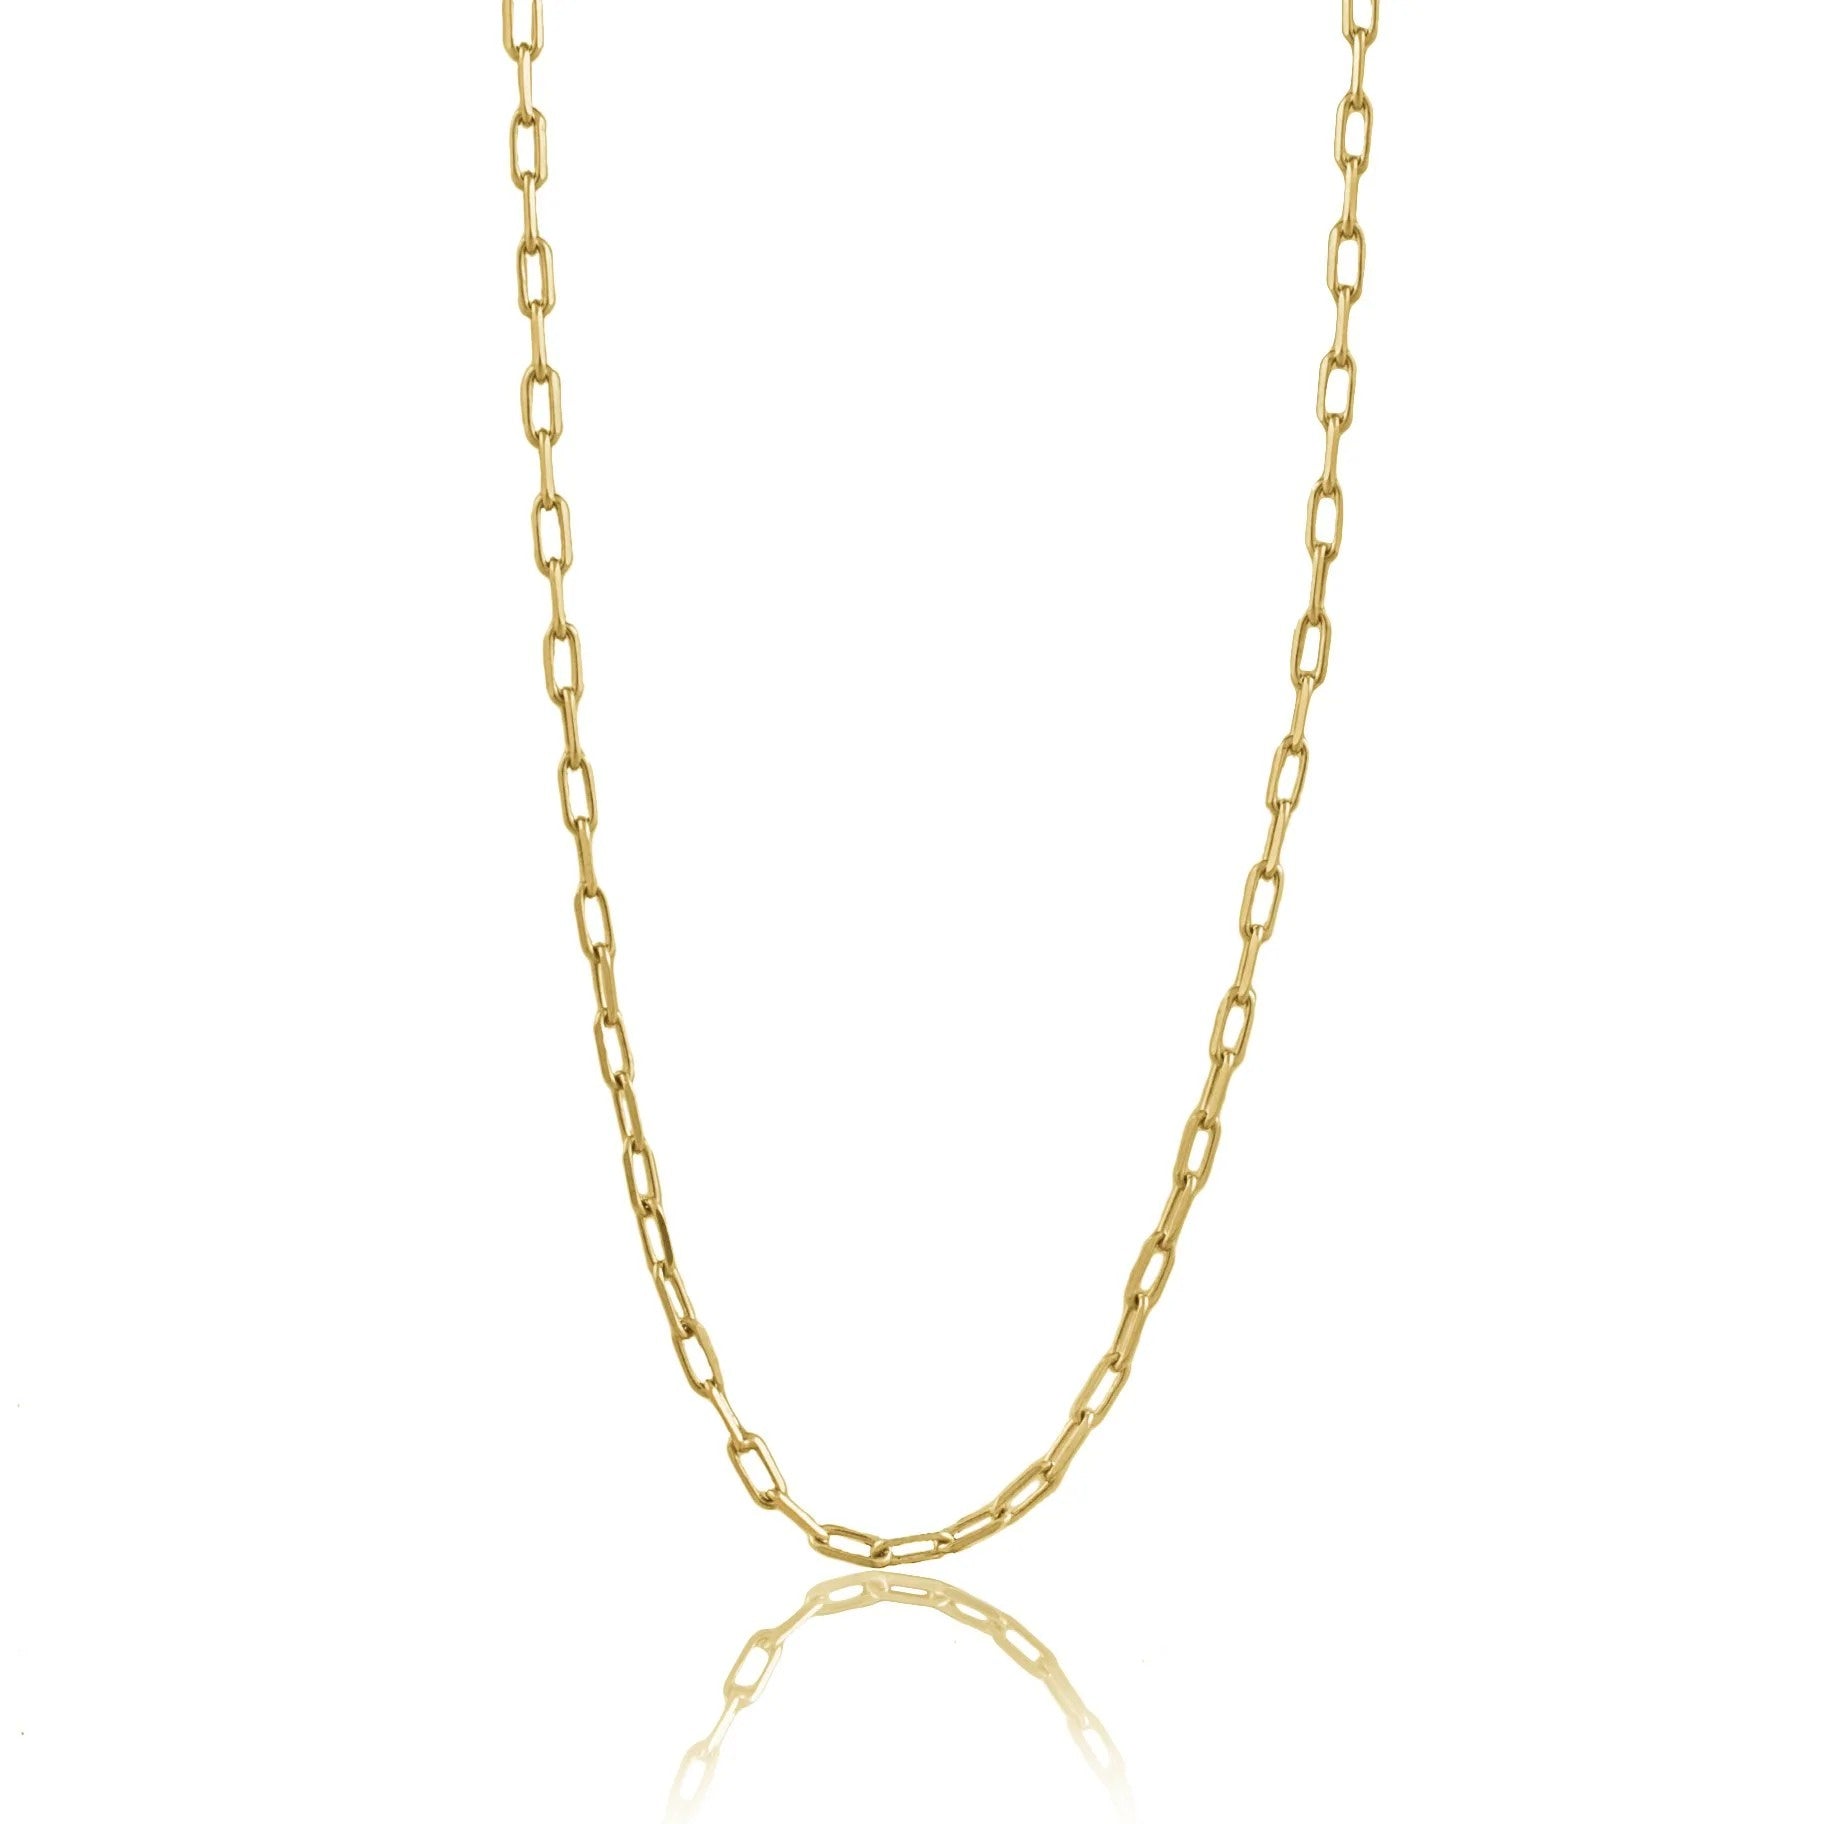 Luna & Rose Gold Long Beach Link Chain Necklace